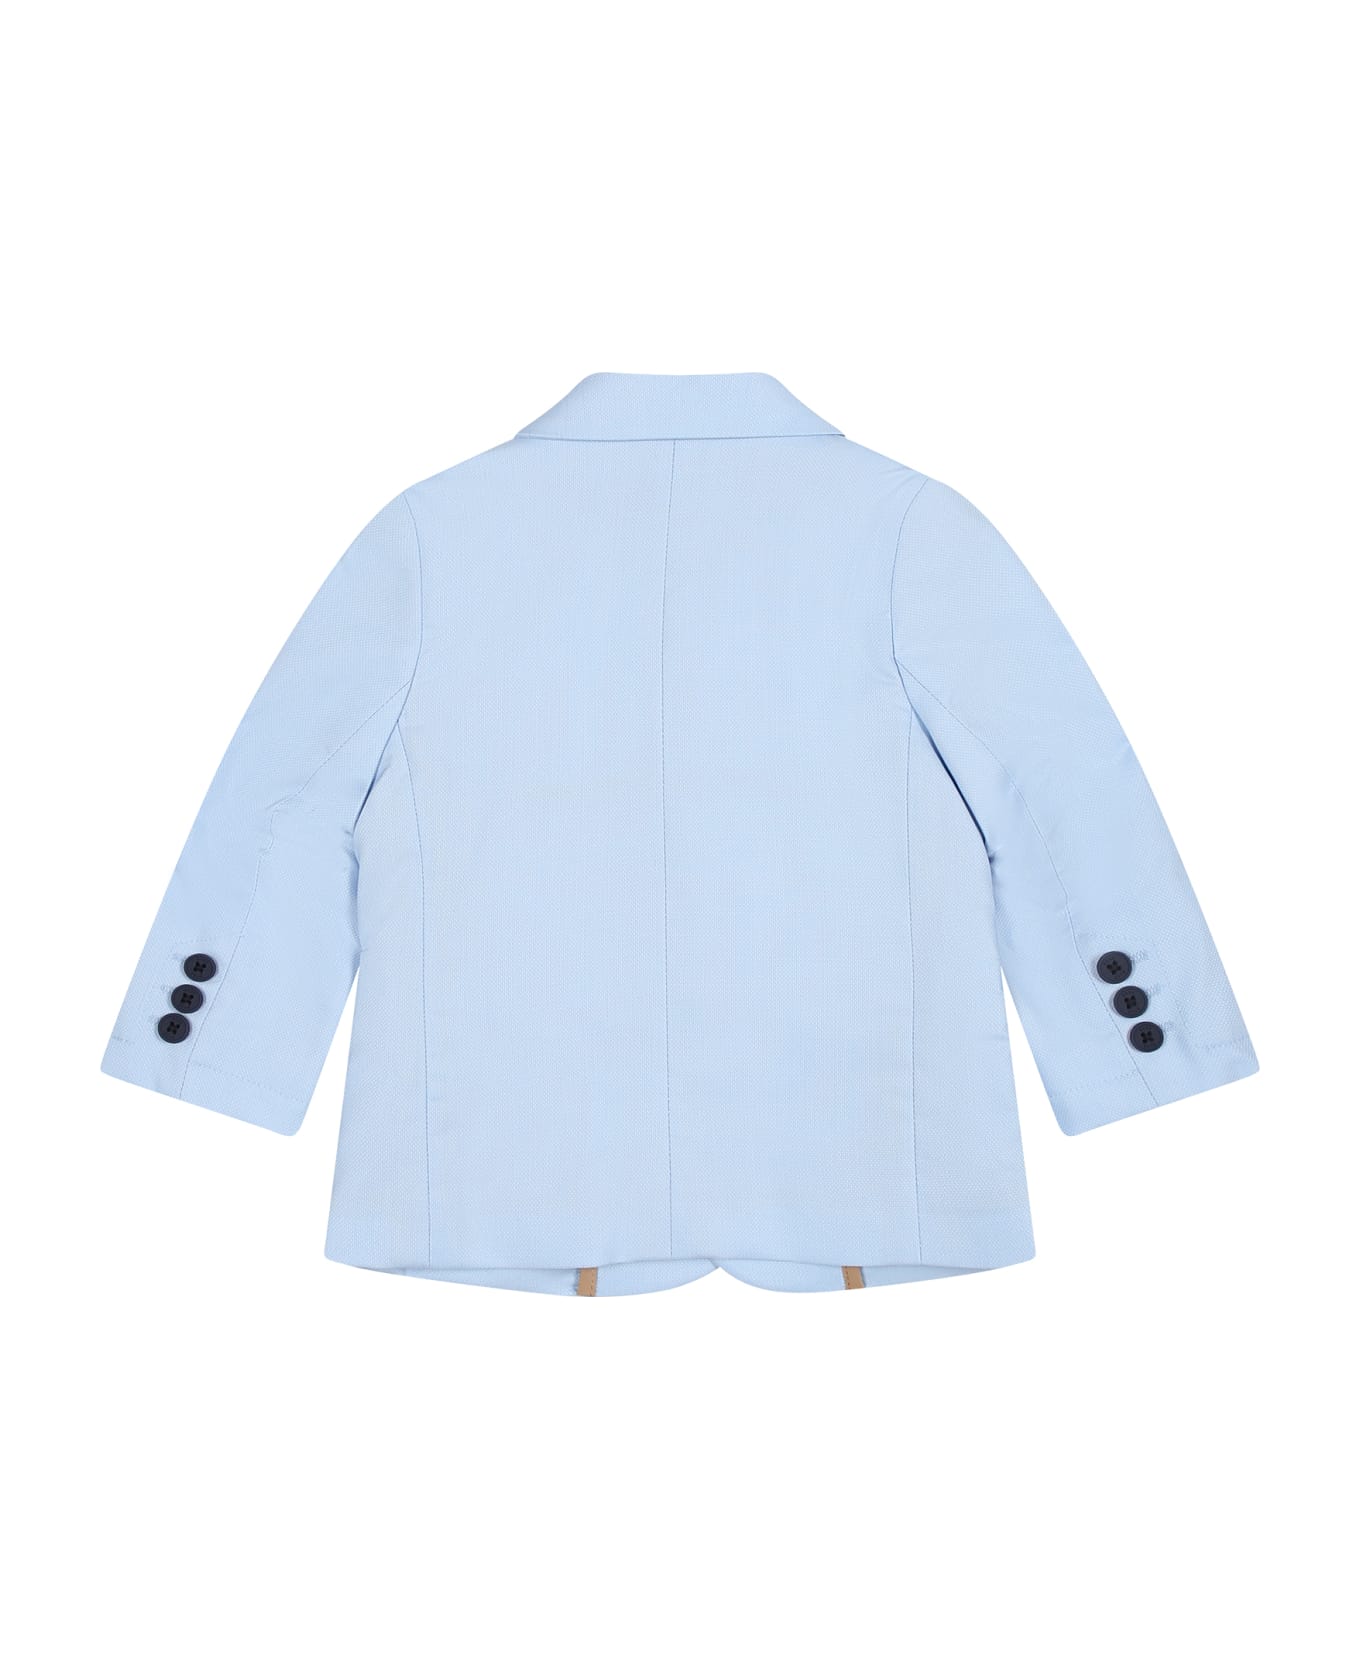 Hugo Boss Sky Blue Jacket For Baby Boy - Light Blue